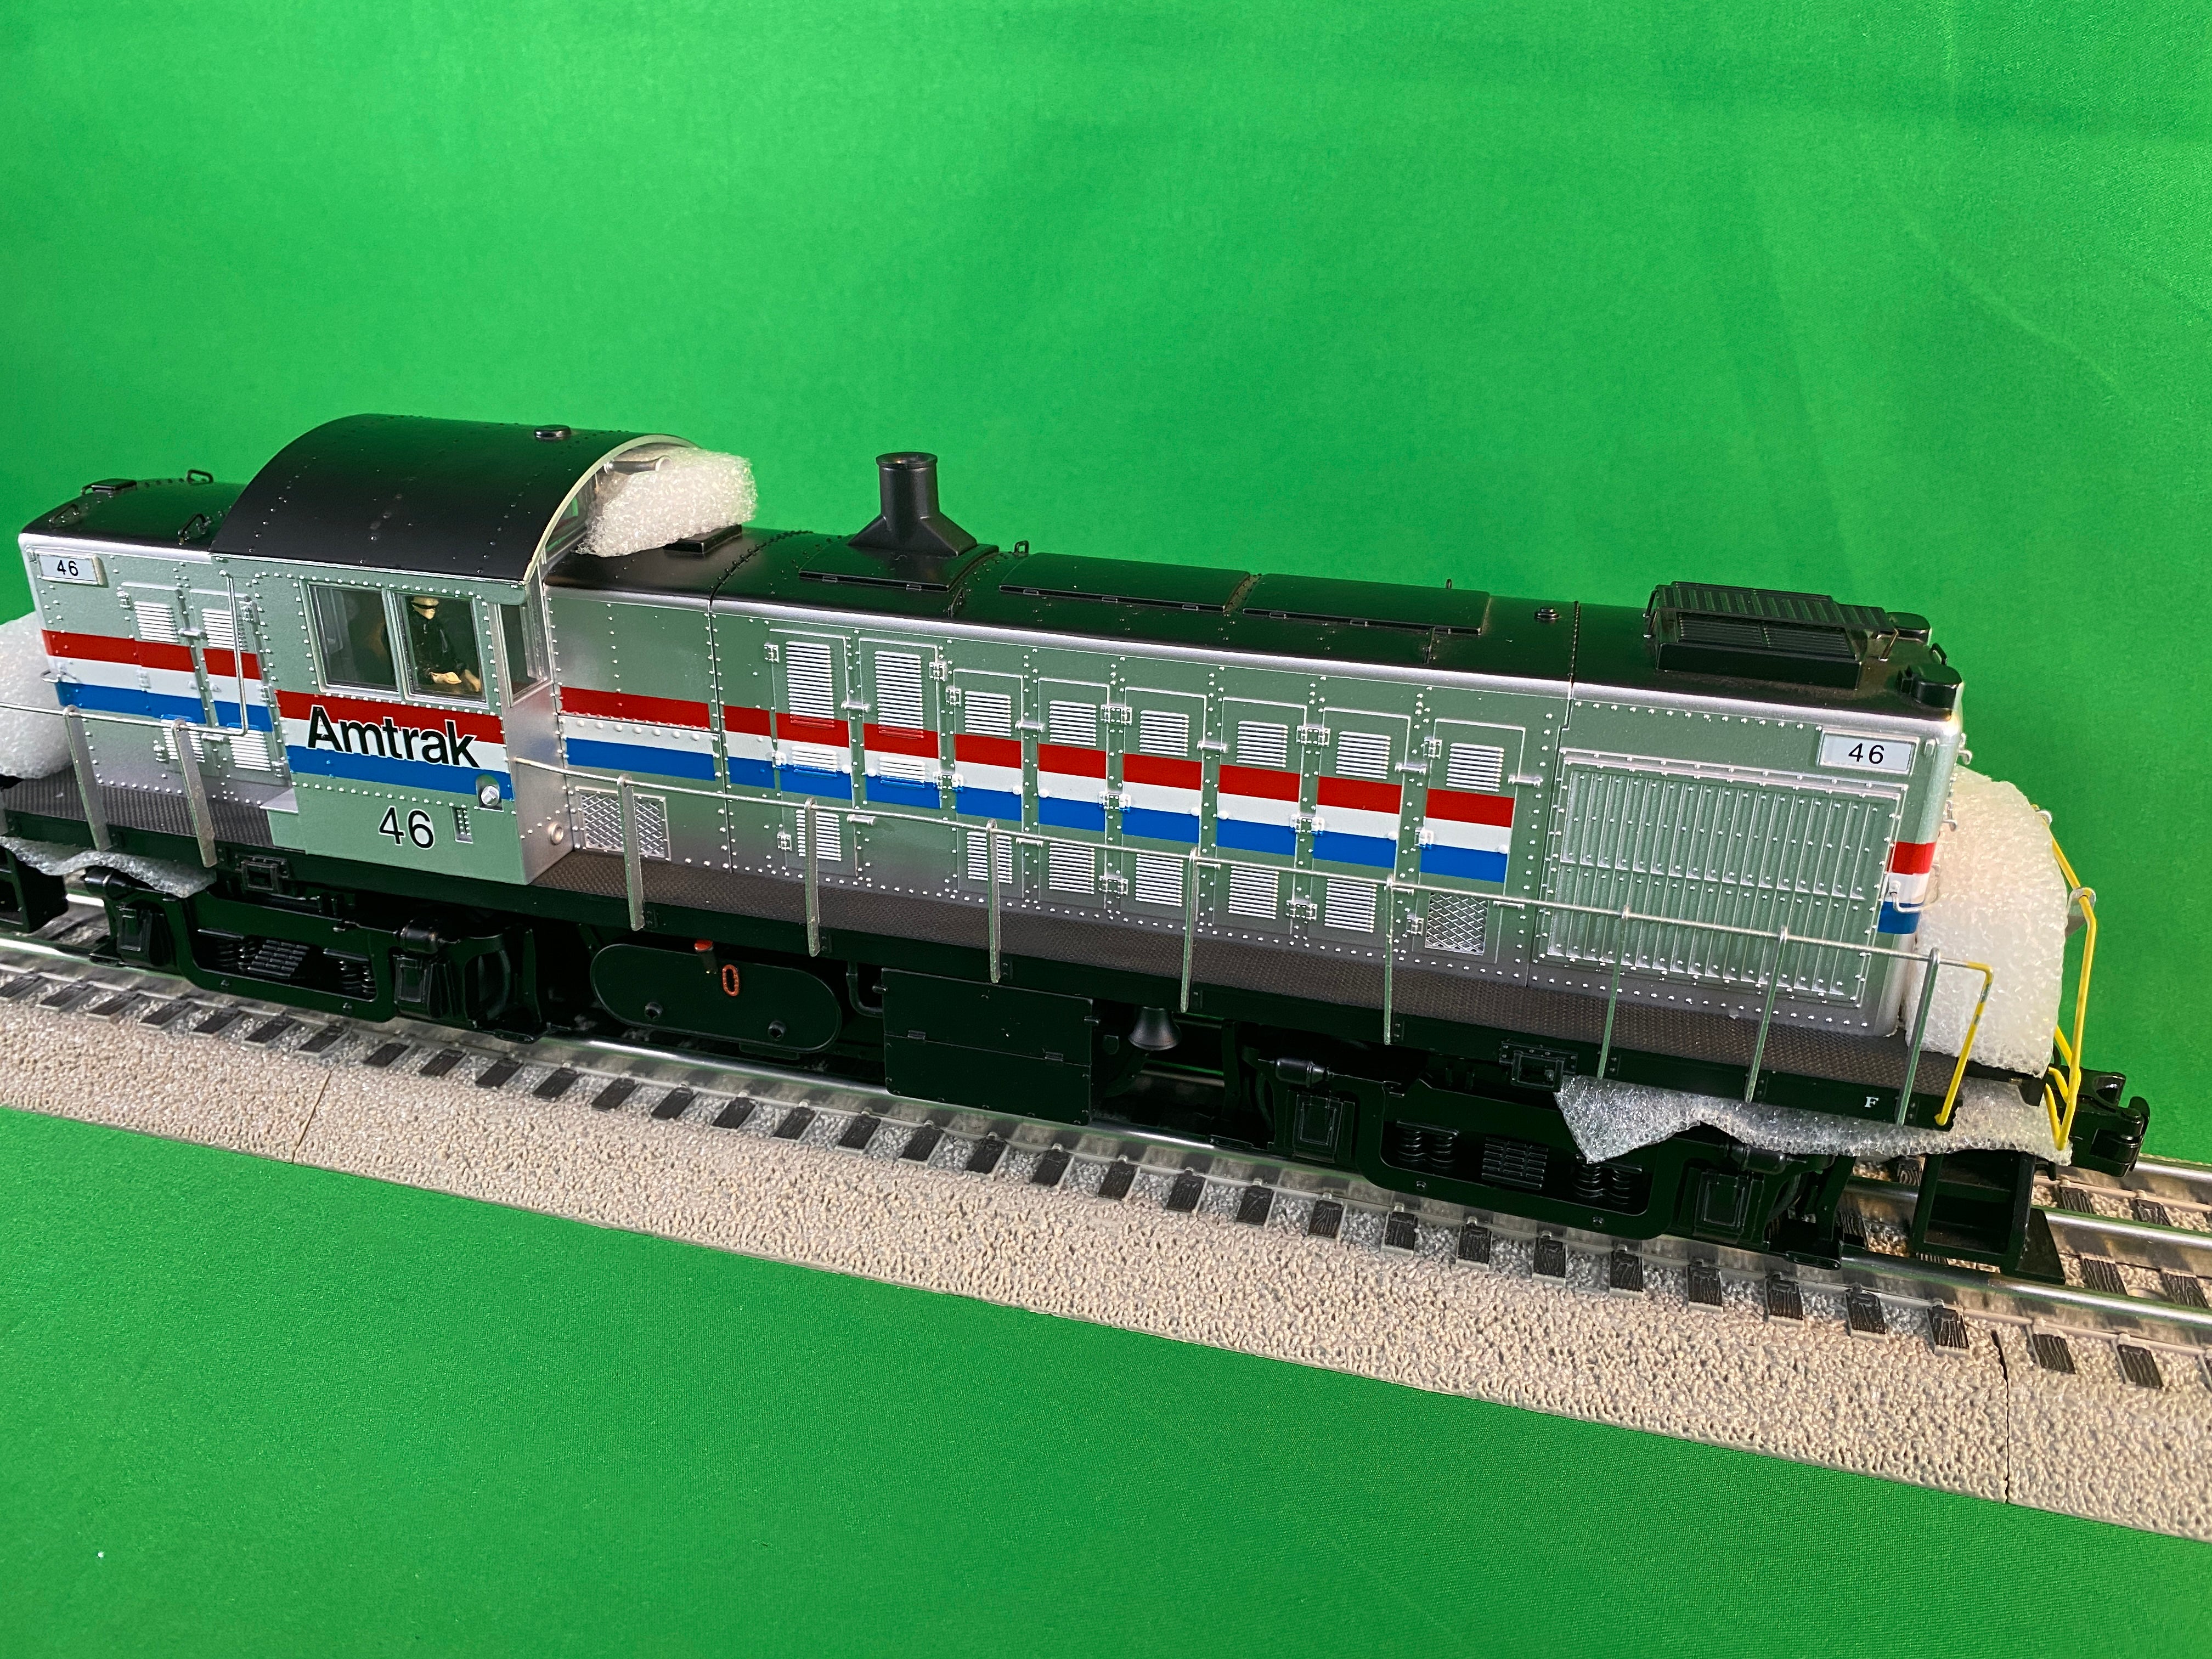 MTH 30-20867-1 - RS-1 Diesel Engine "Amtrak" #46 w/ PS3